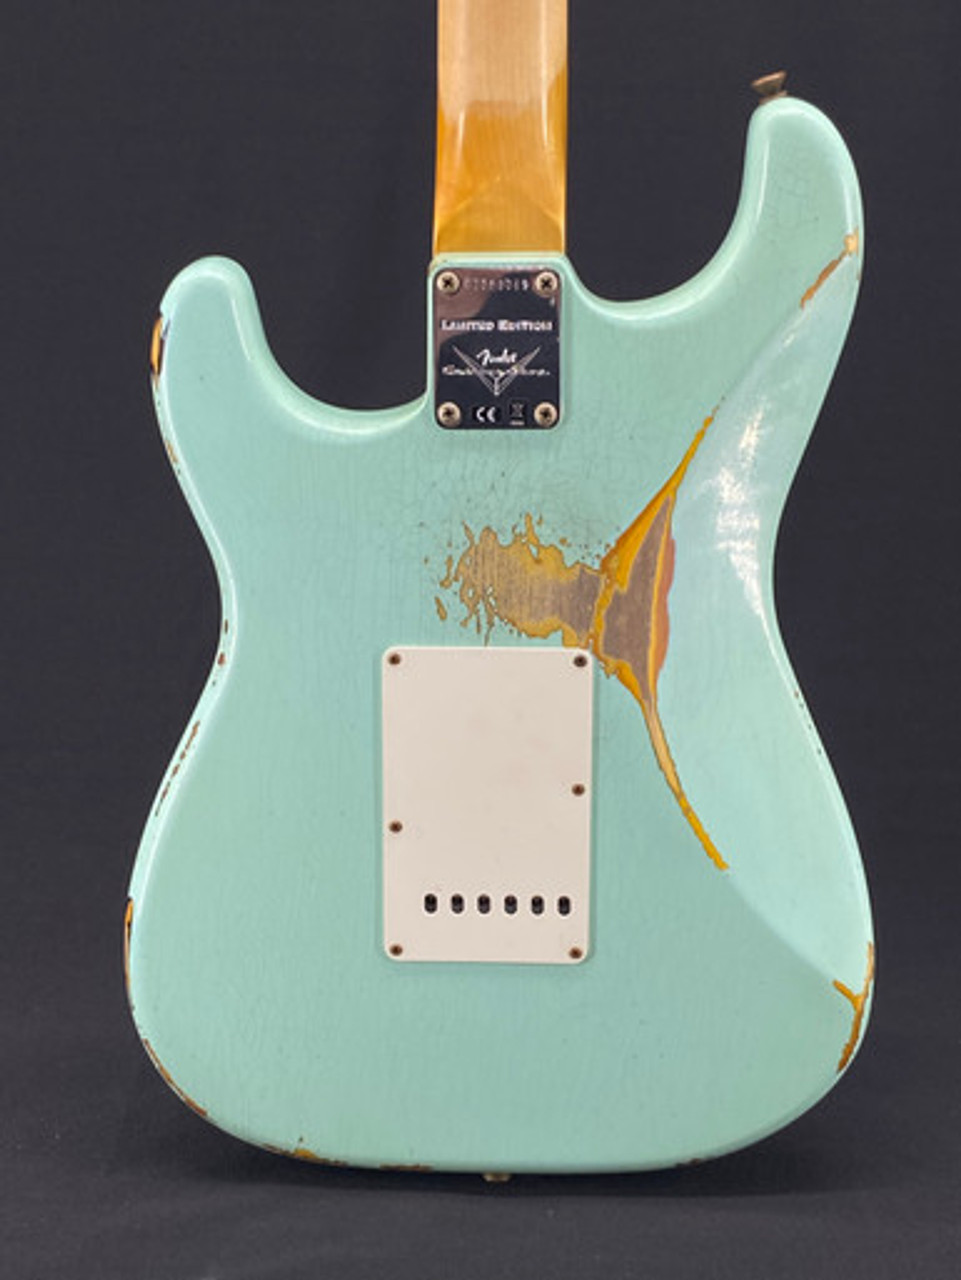 Fender Custom Shop Limited Edition 1967 Strat Heavy Relic in Aged Surf Green over 3-Tone Sunburst